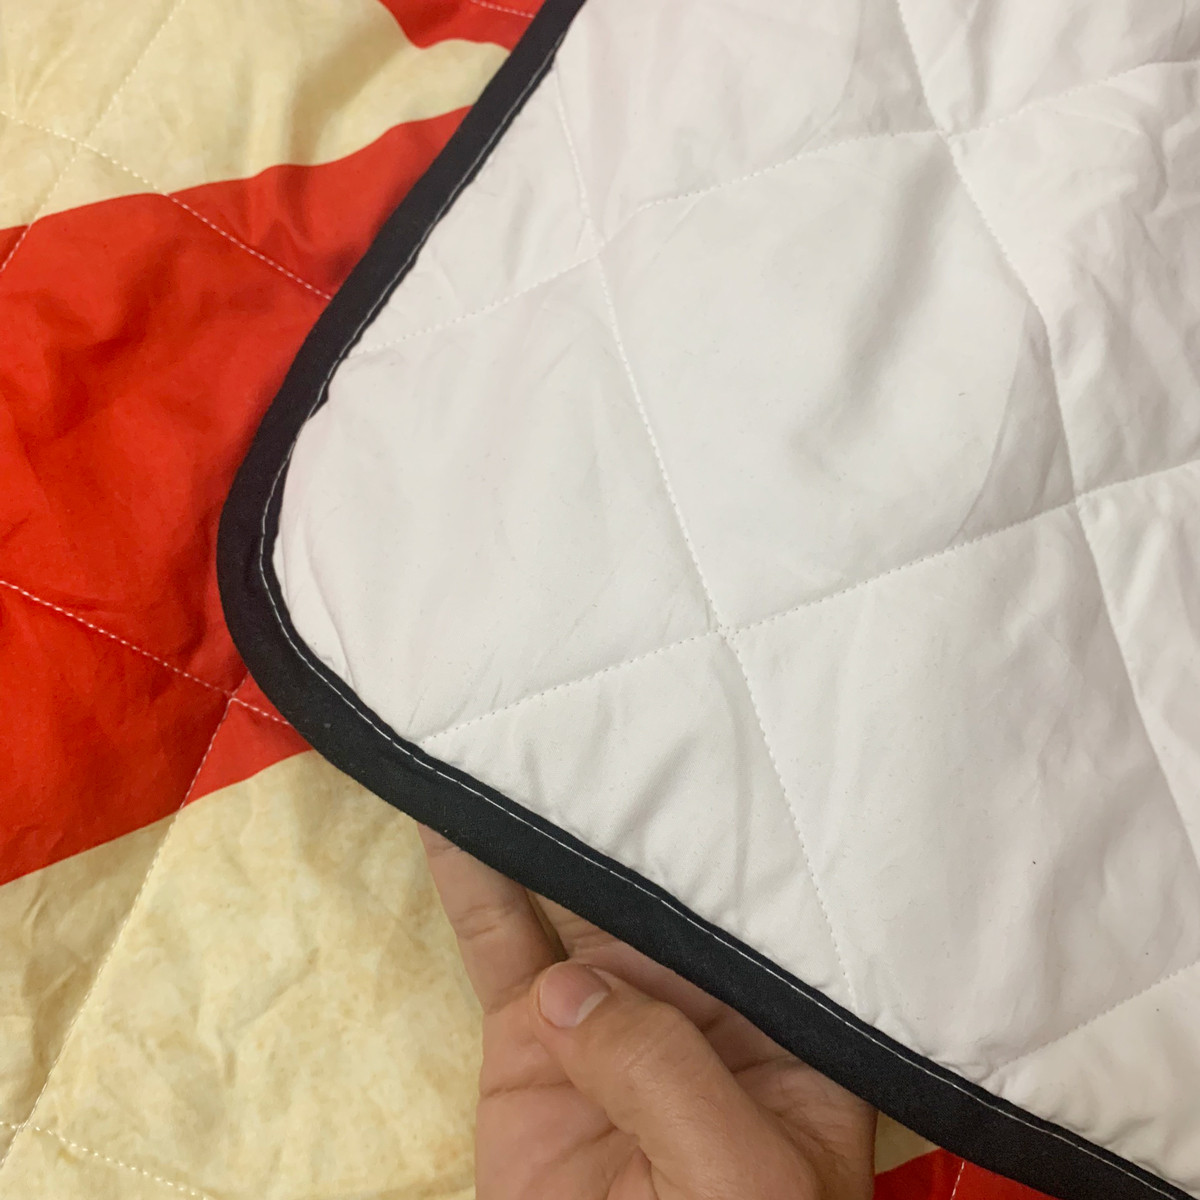 Teal Ombre Duvet Cover Bedding Set Quilt Blanket Bedding Set Cover Flatsheet 2 Pillow Cases